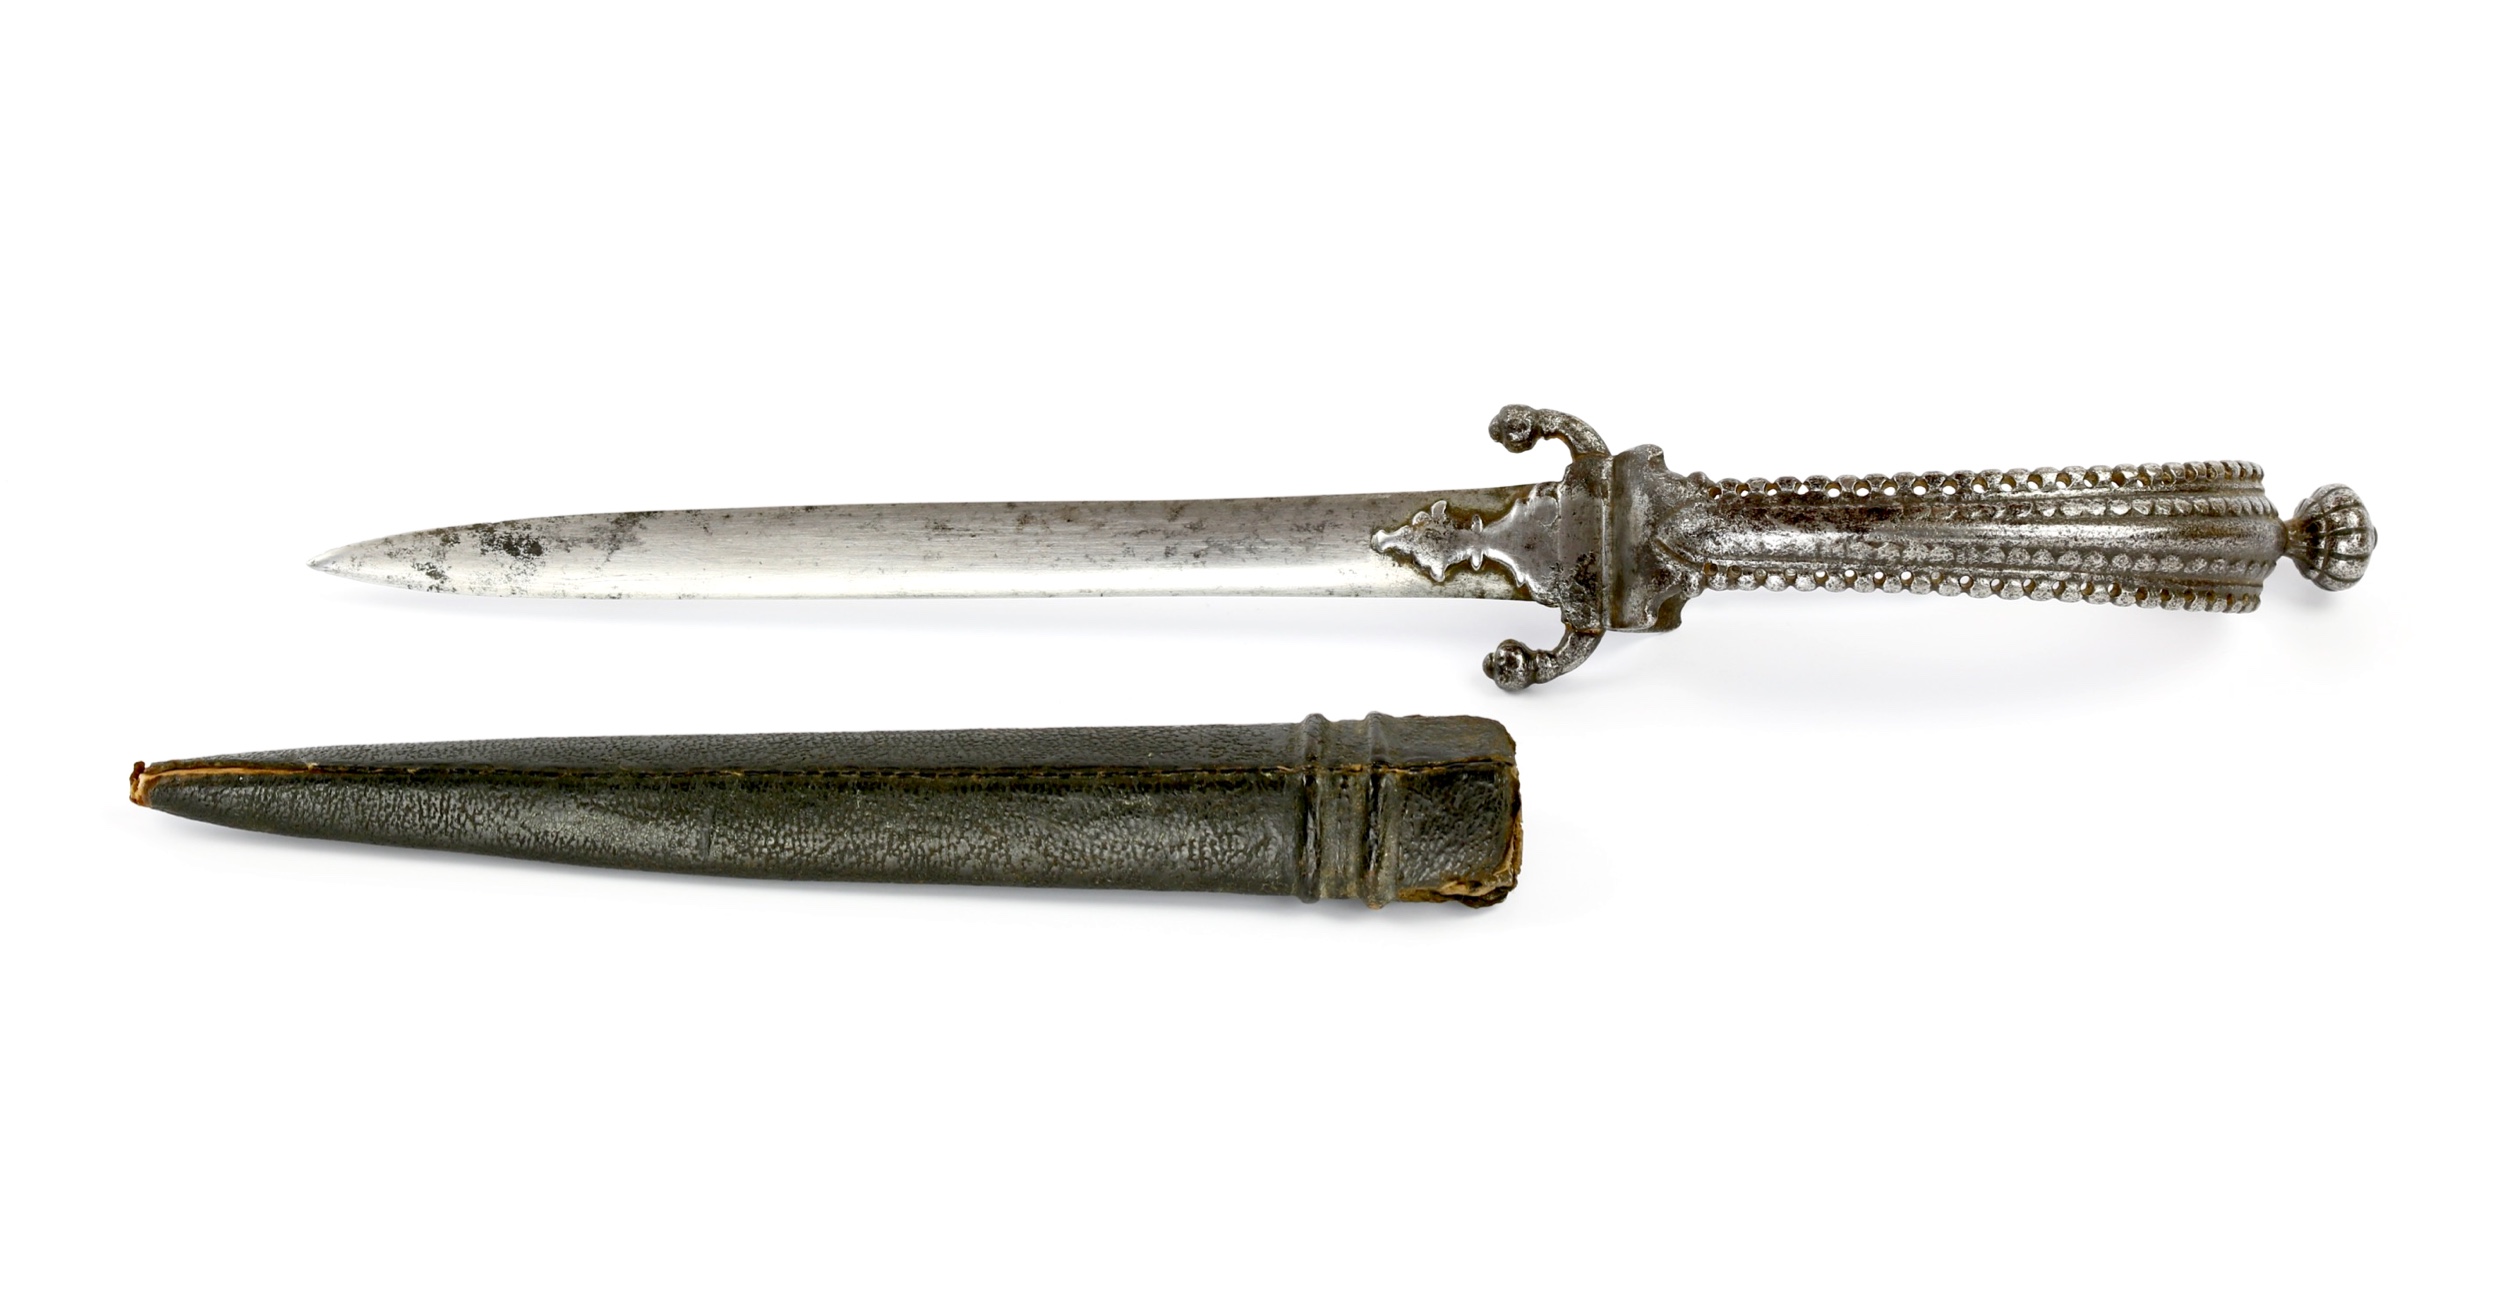 South Indian stiletto dagger